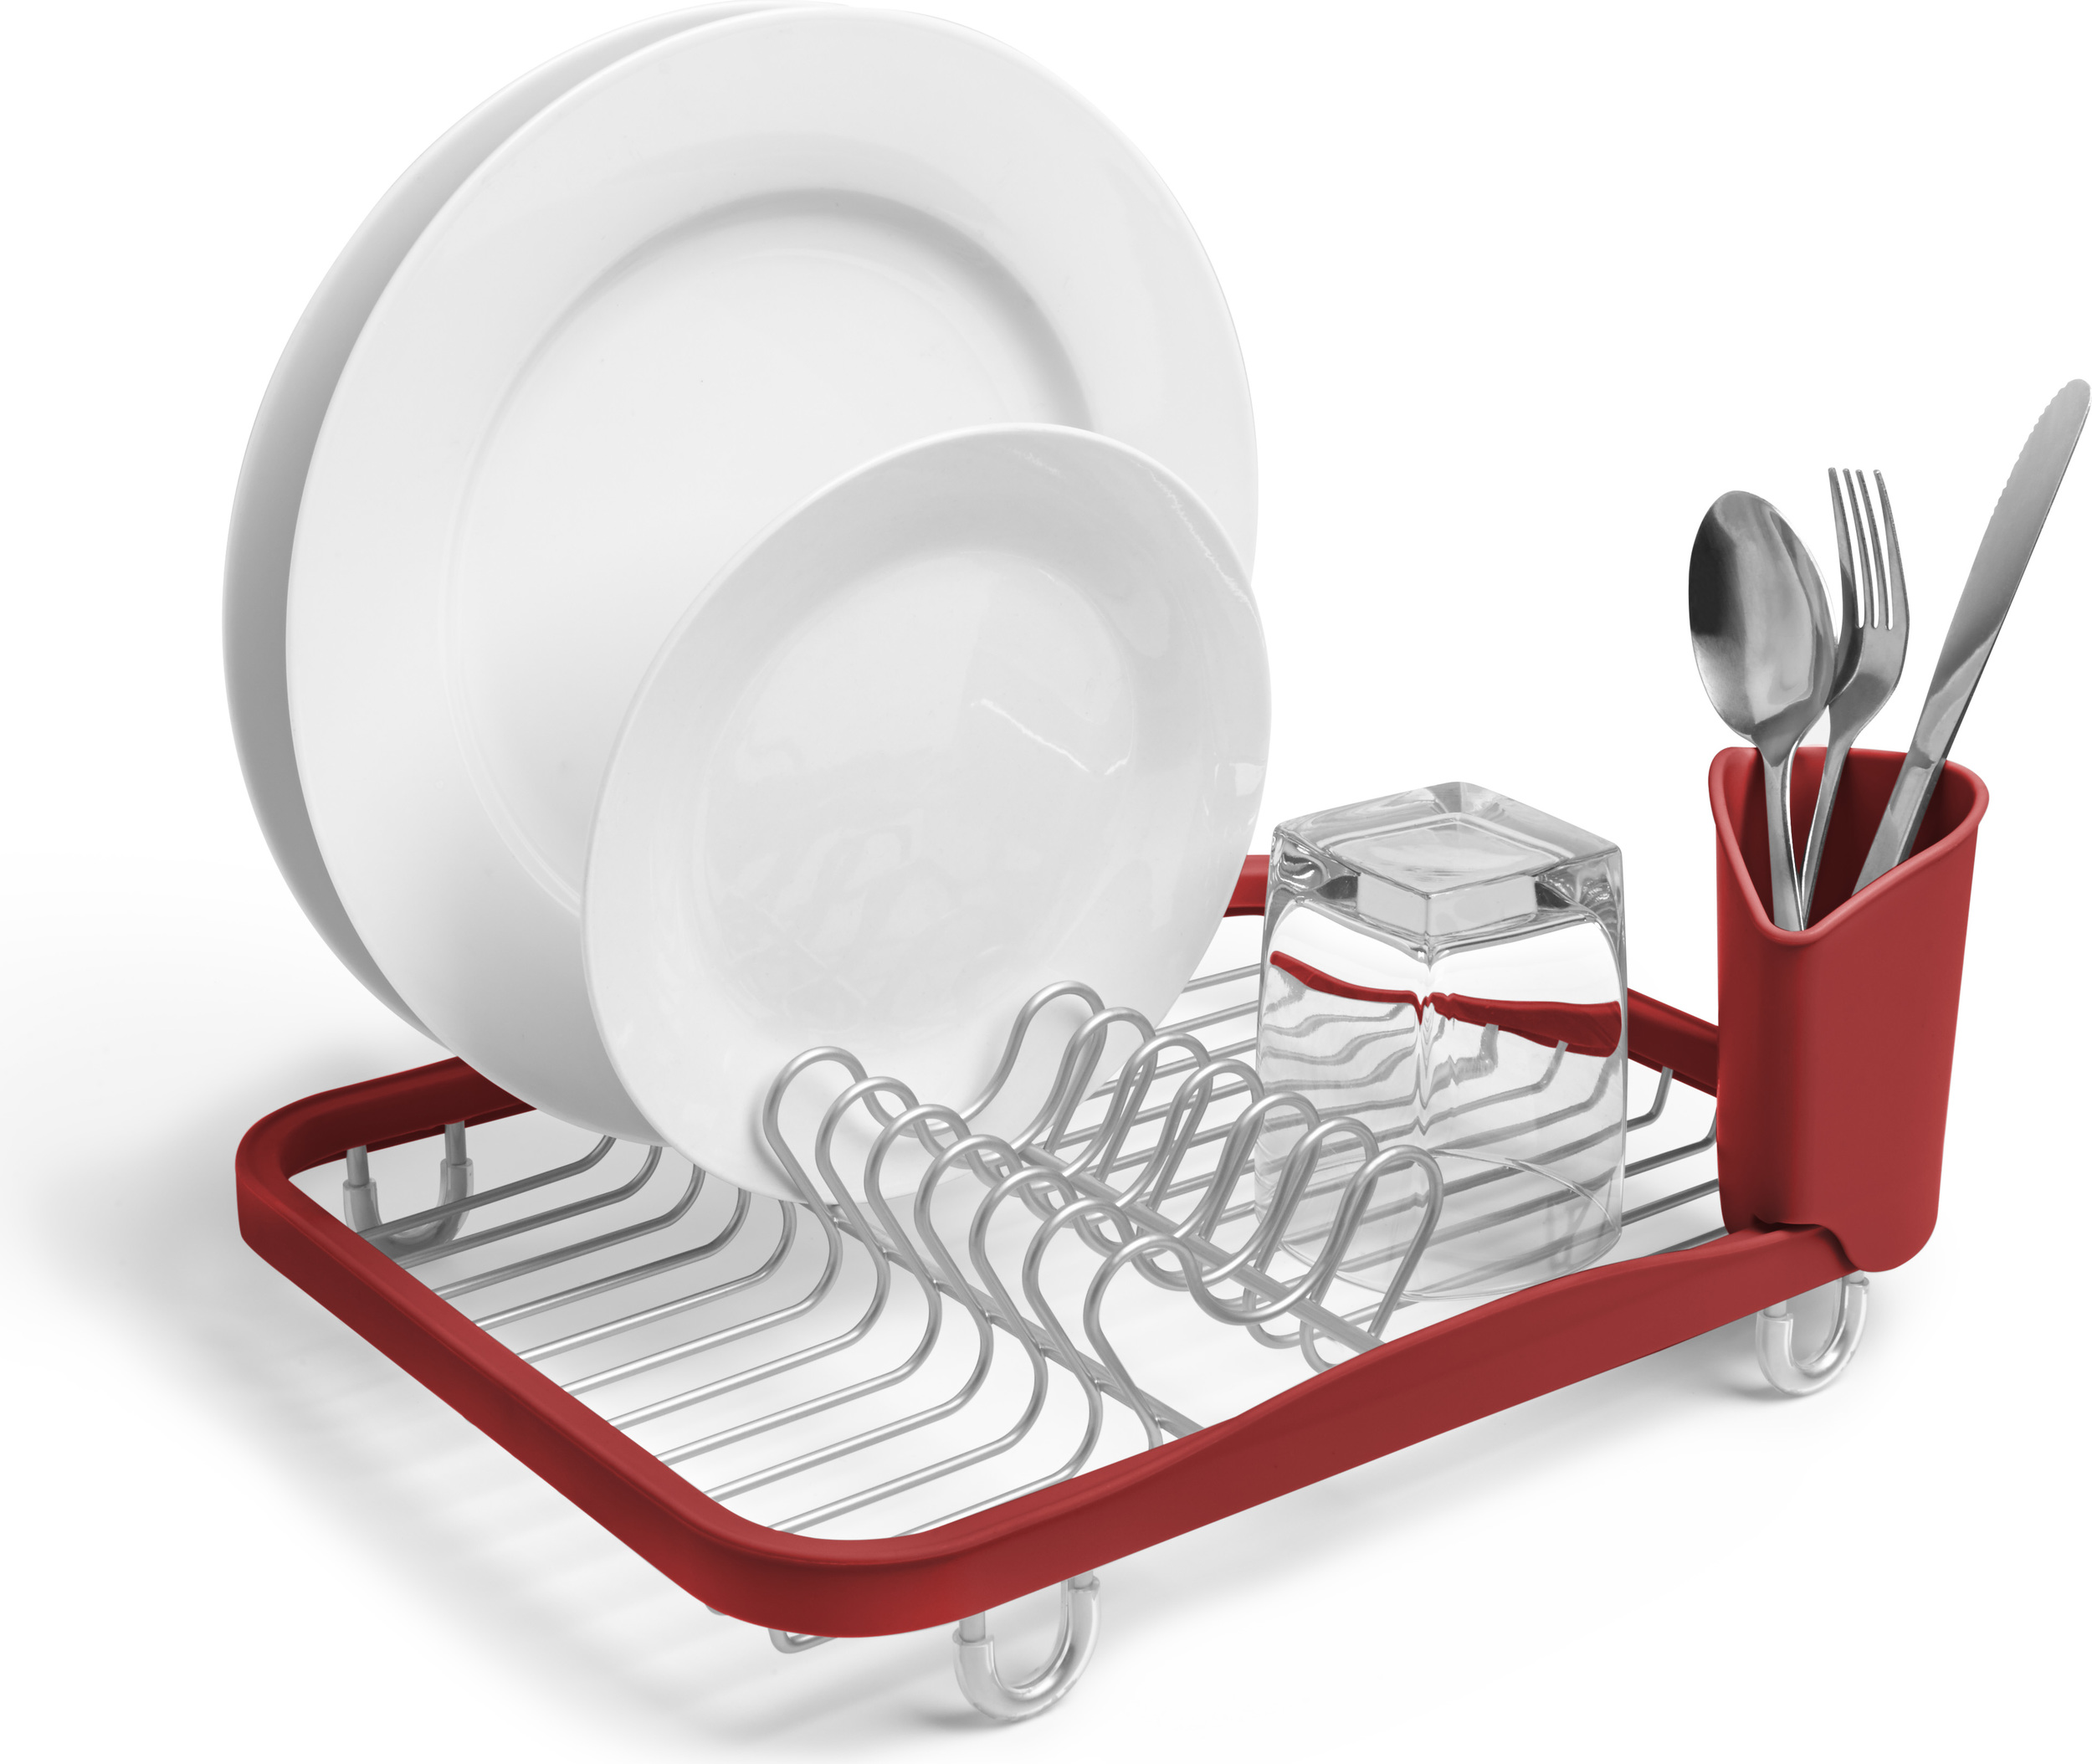 Sinkin Dish drying rack - Umbra 330065-718